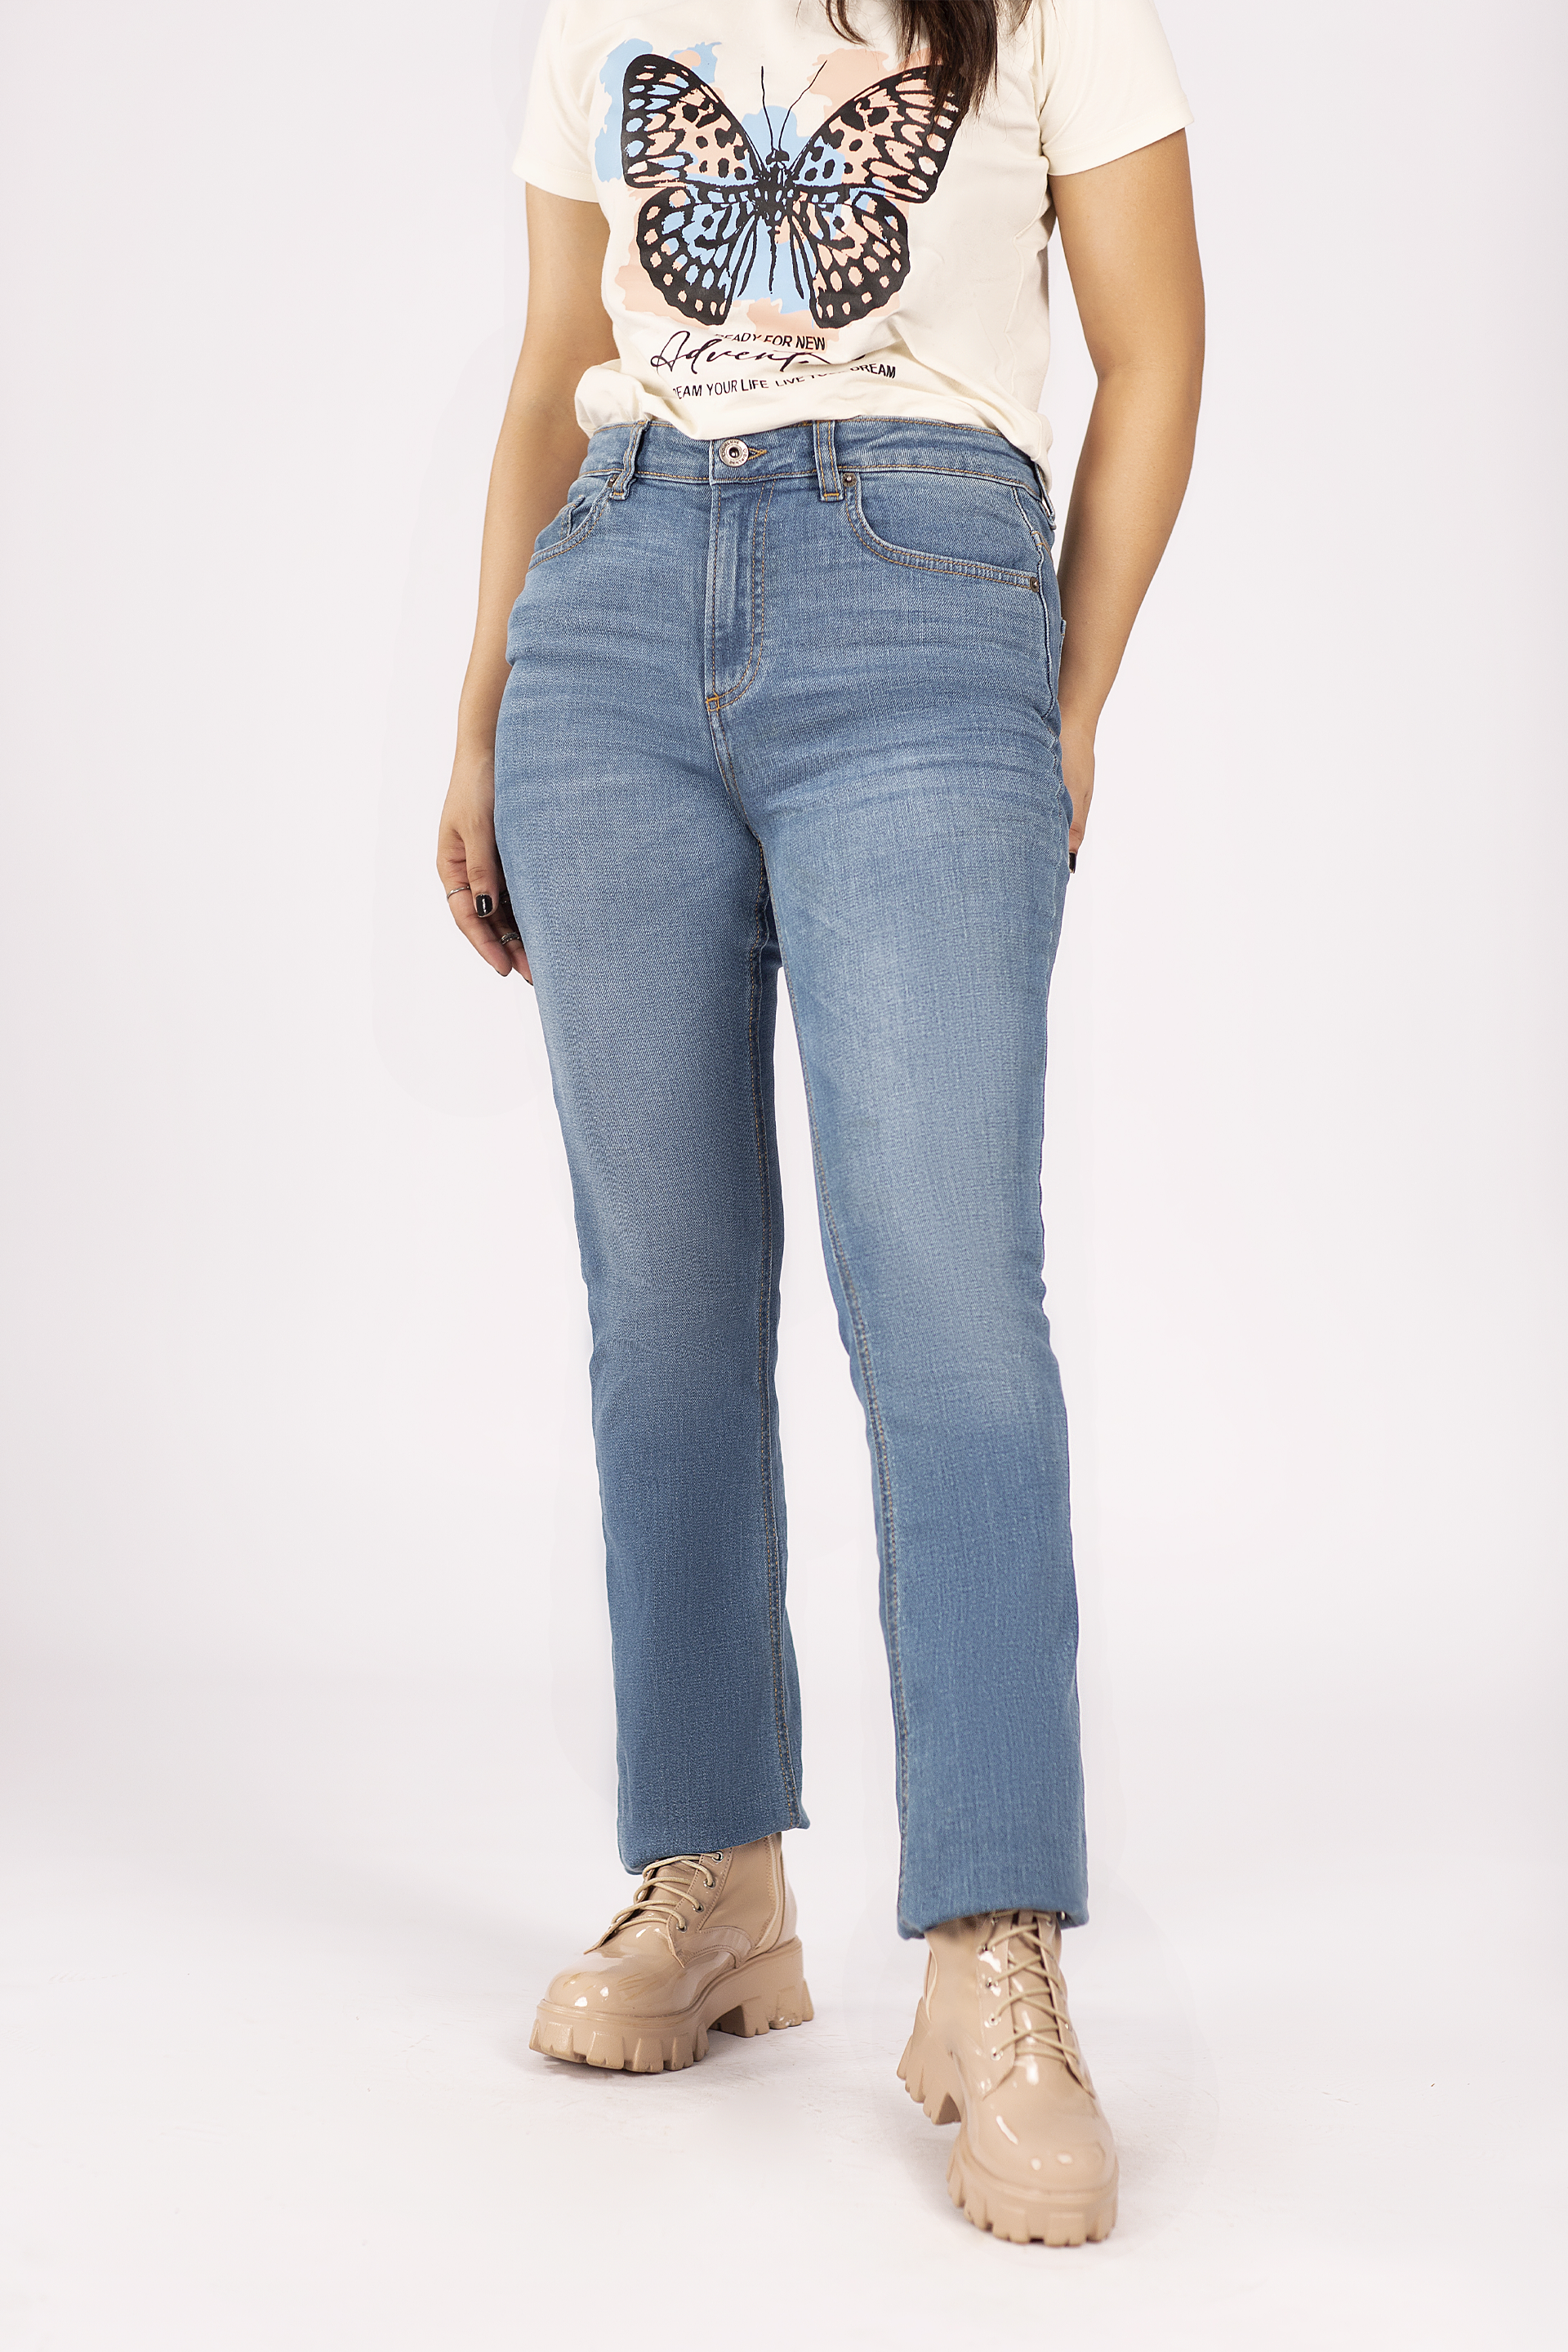 Louis Vuitton Washed Denim Women's Blue Skinny Jeans Size 28 EUC, $1,500 |  eBay